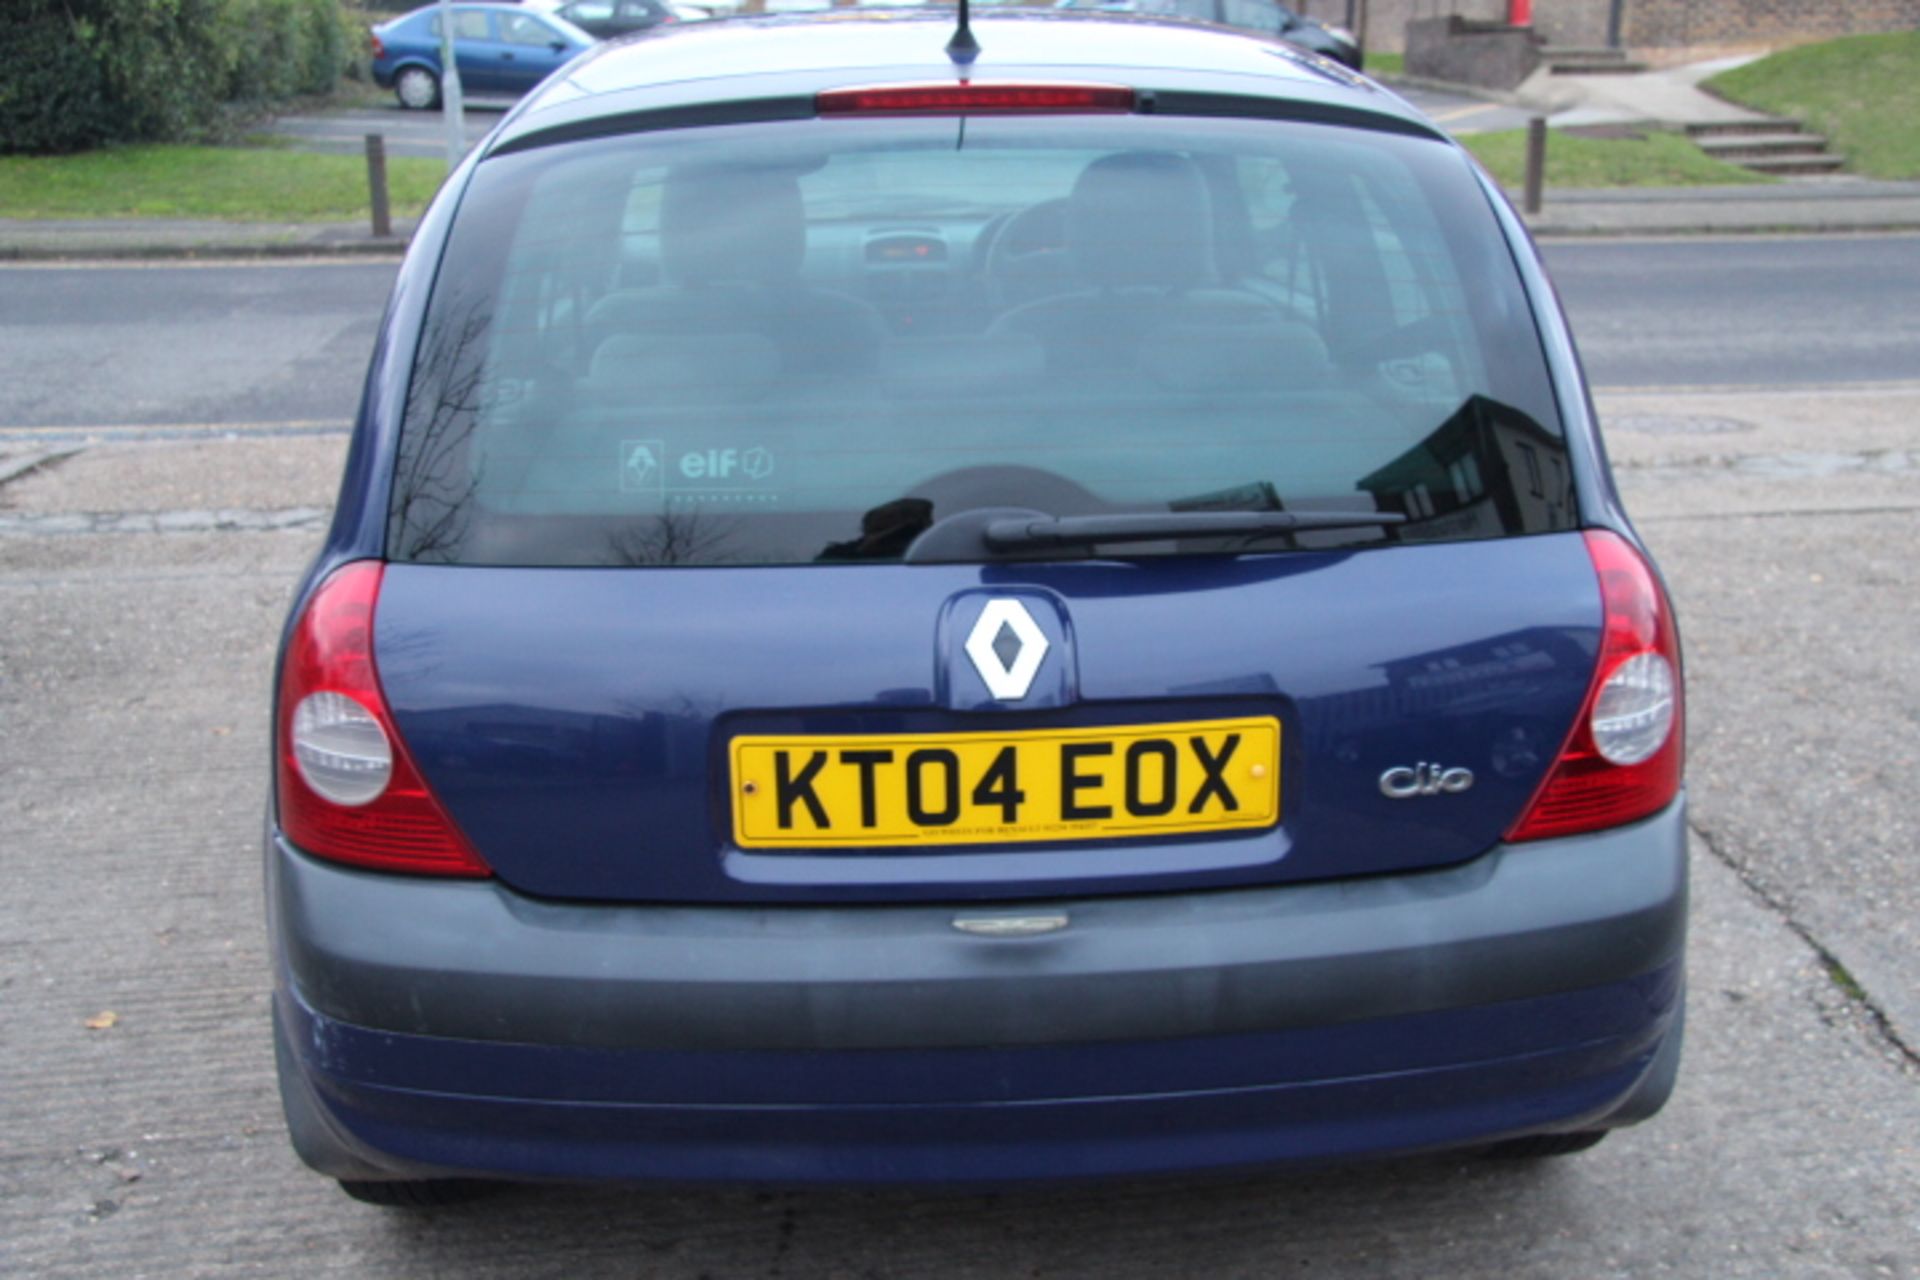 Renault Clio KT04 EOX 1.4 Petrol Auto - Keys - MOT Till April 2015 (No Certificate) - Mileage 74, - Image 4 of 5